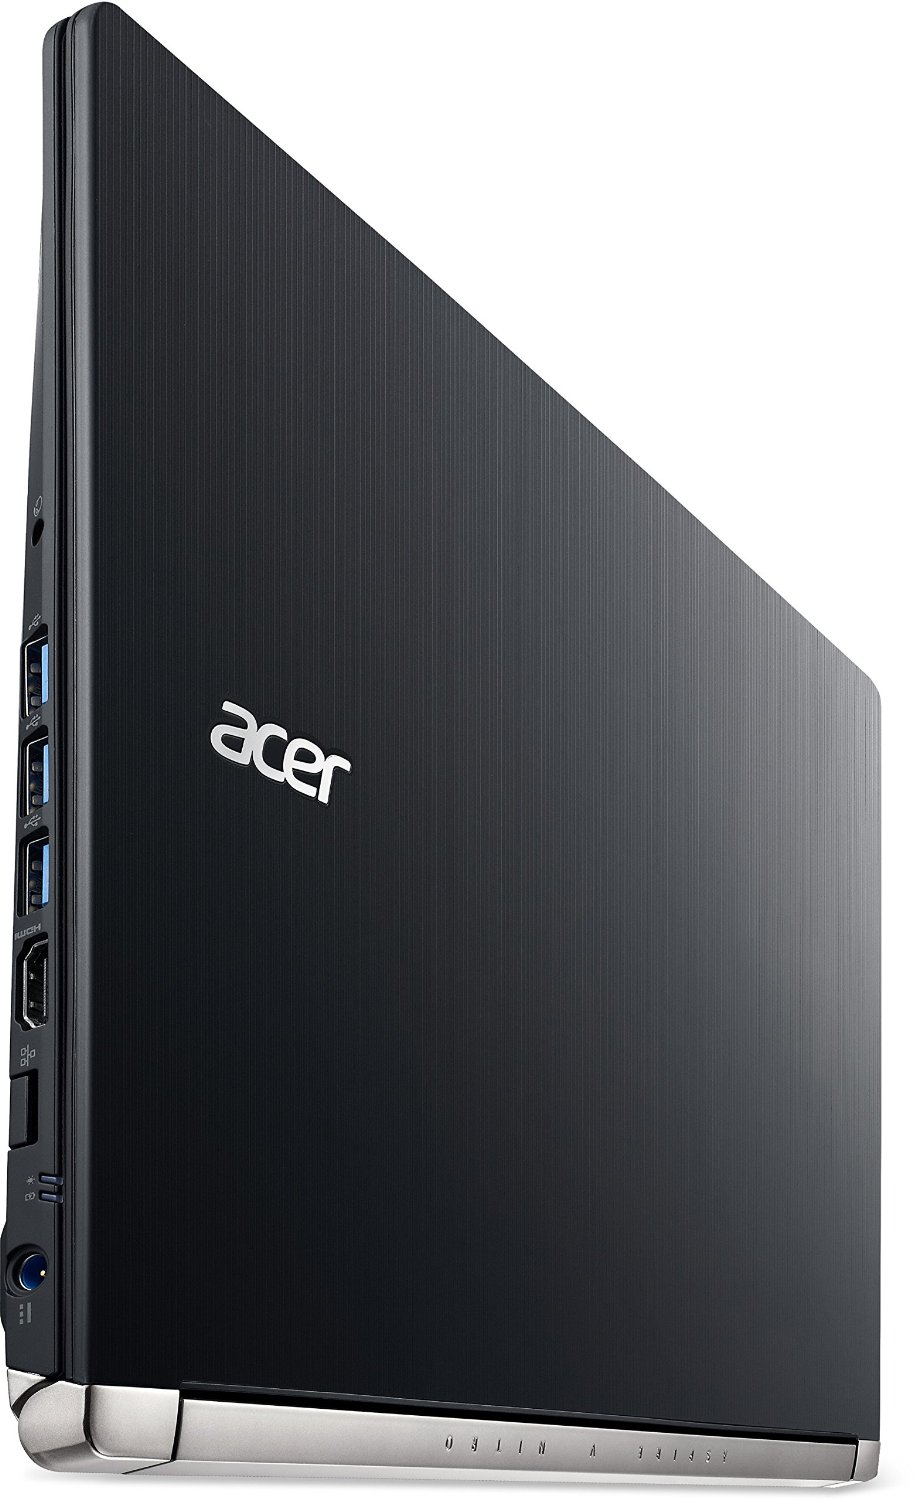 Acer Aspire VN7-571G-52DB